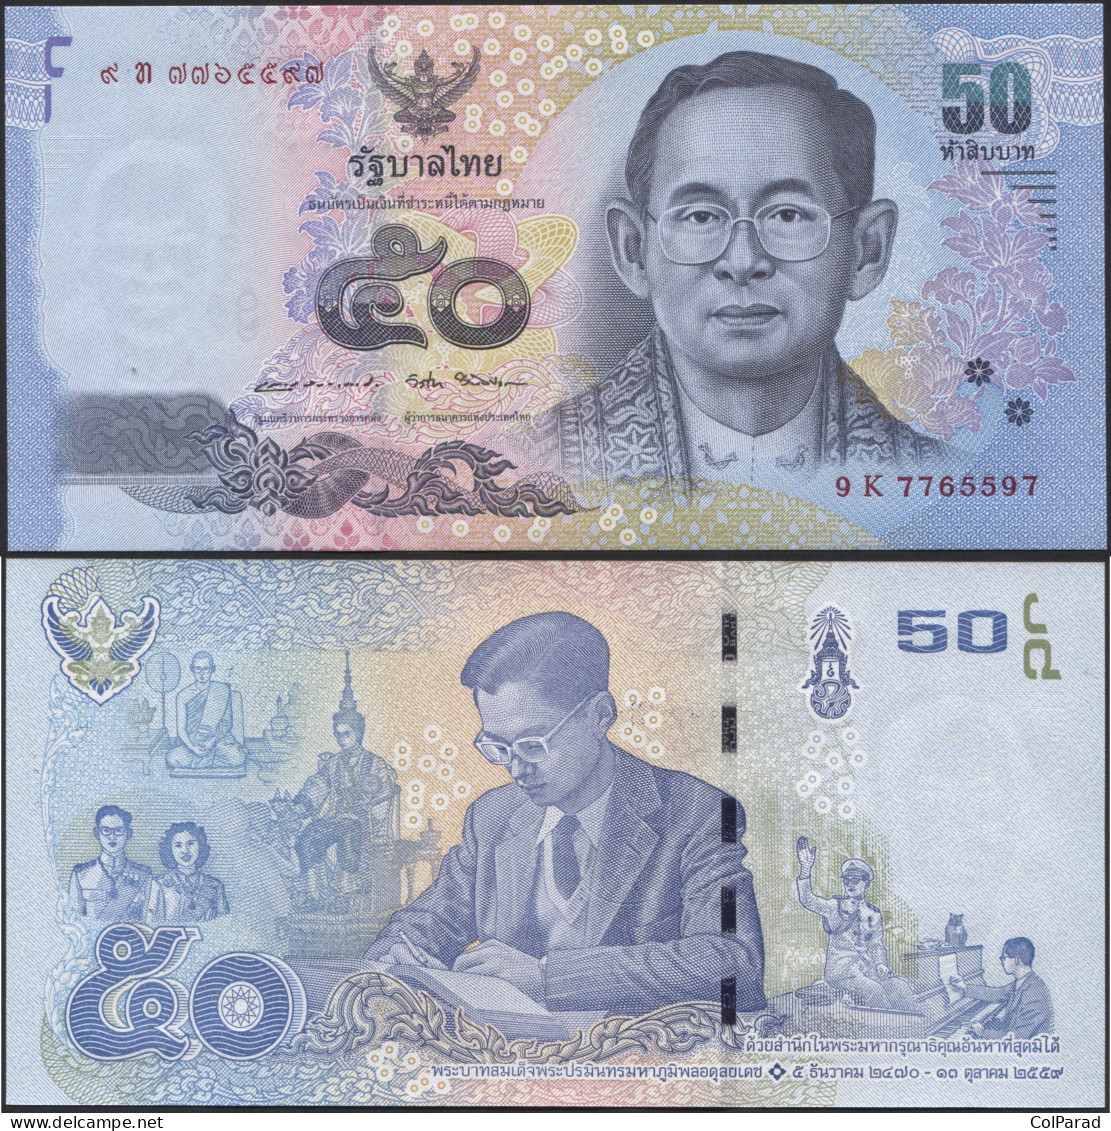 THAILAND 50 BAHT - BE2559 (2017)  - Paper Unc - P.131a Banknote - Tailandia